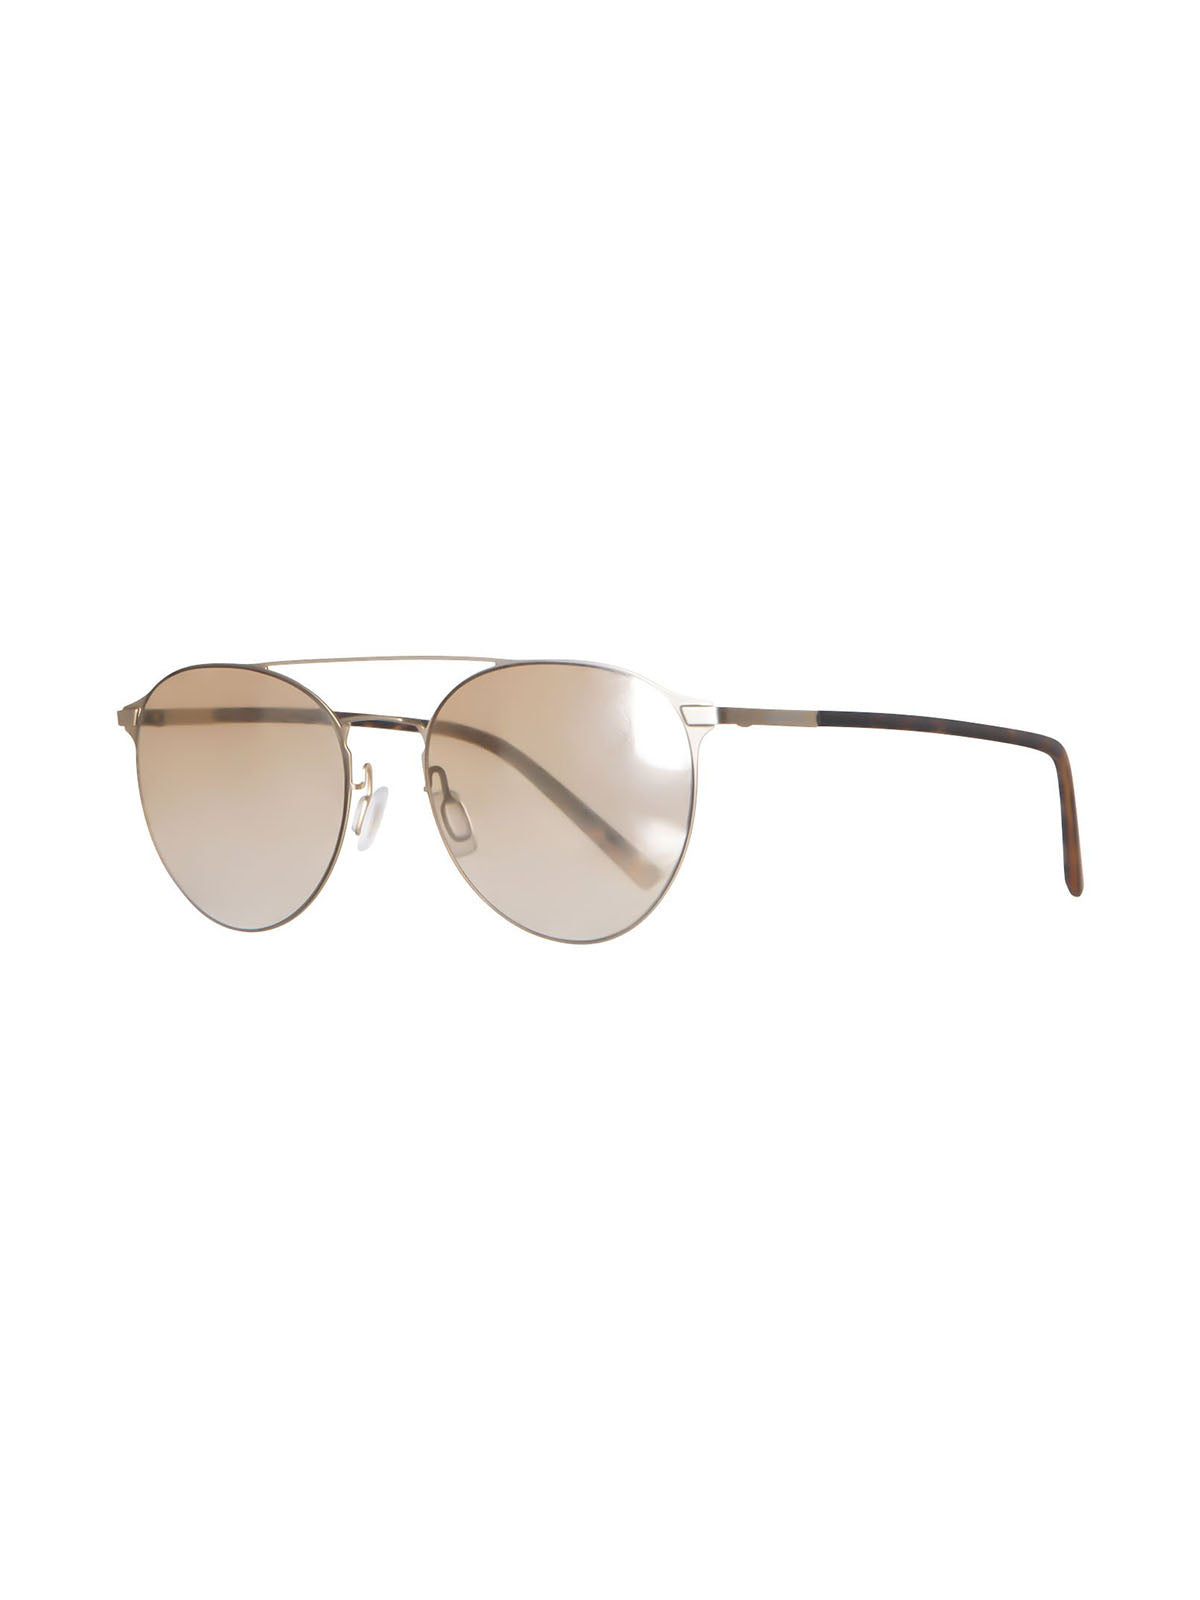 Garda 1 Unisex Sunglasses | Brown